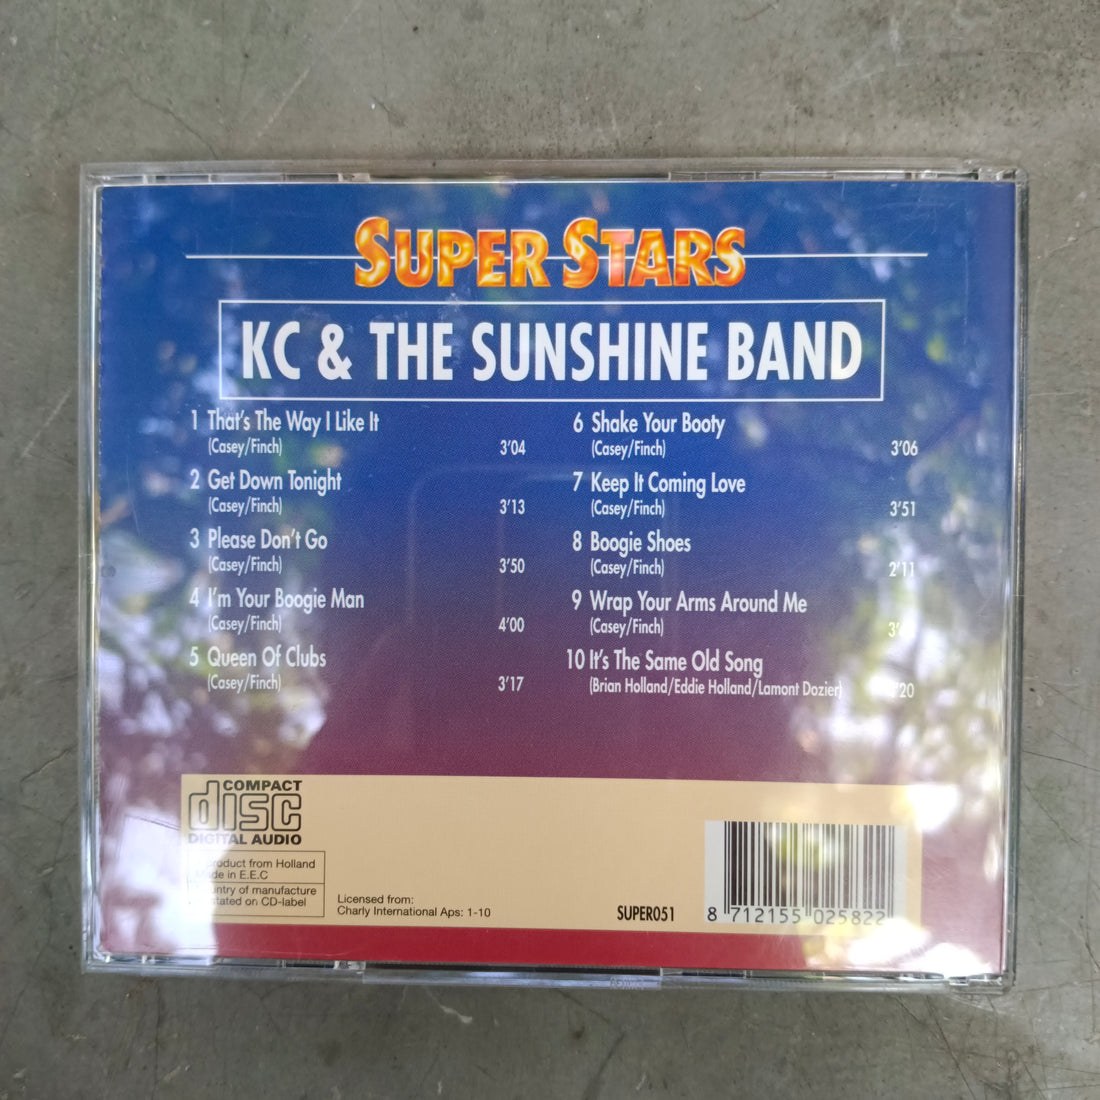 KC & The Sunshine Band - Super Stars (CD) (NM or M-)